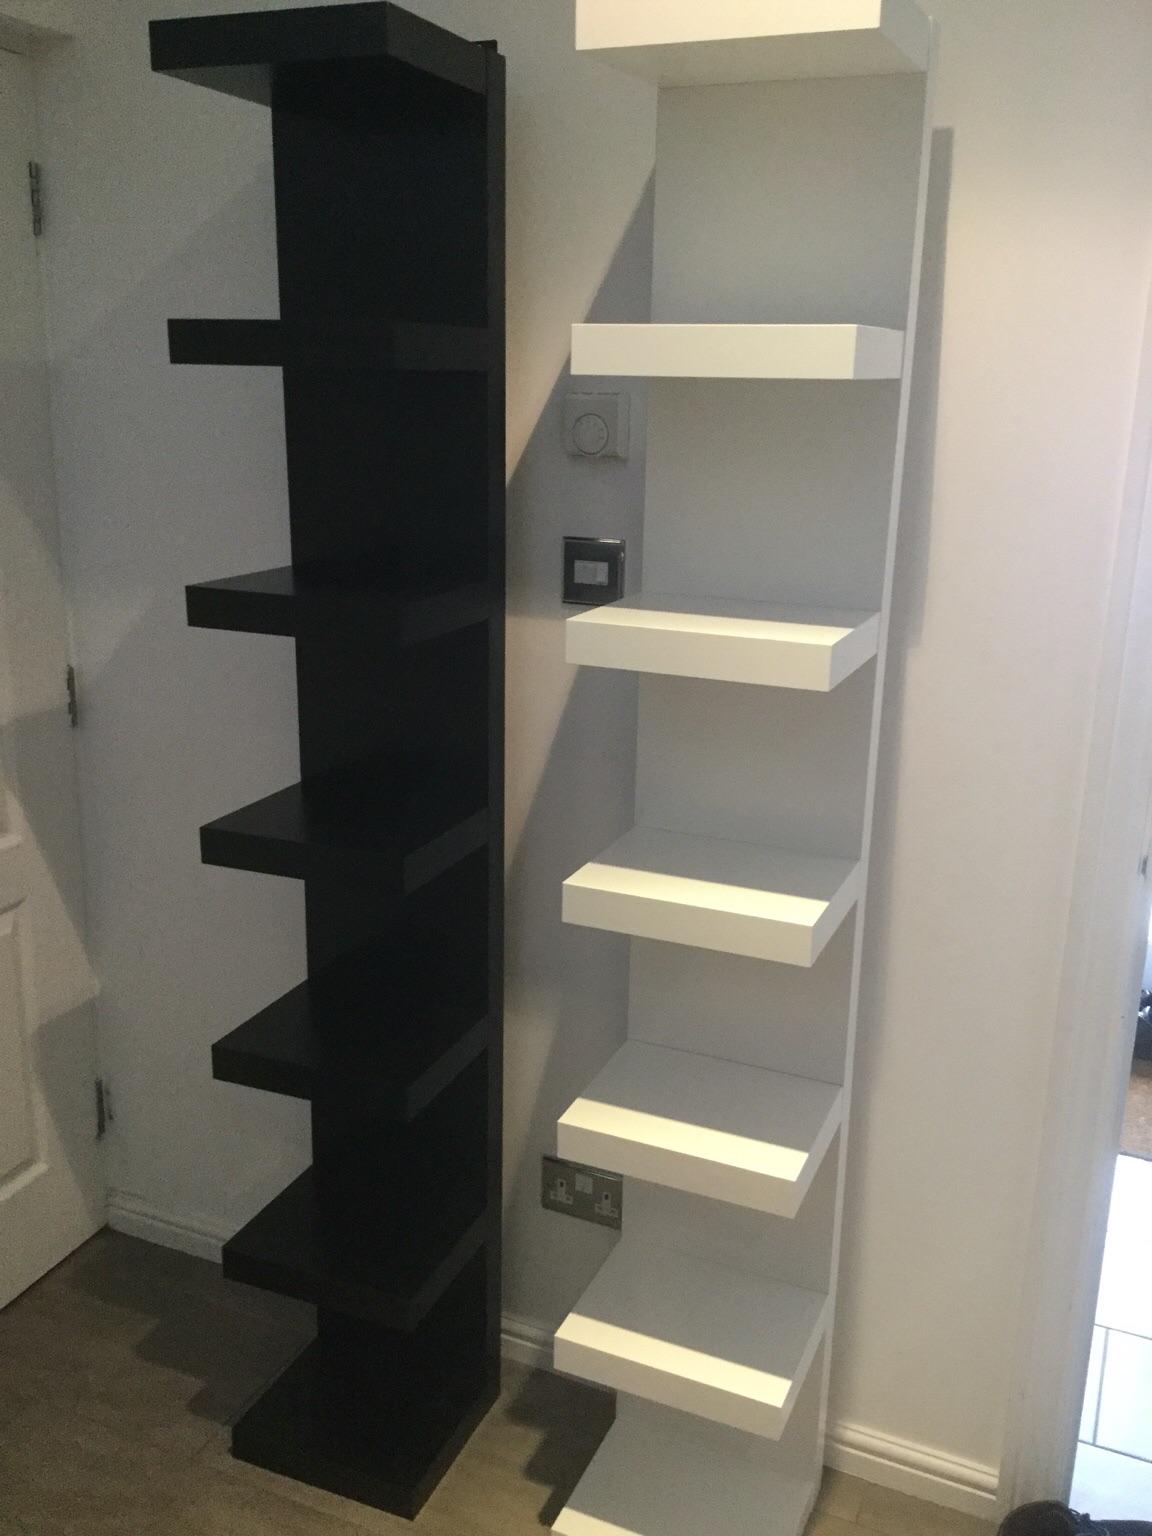 Ikea Lack Wall Shelf Units White Black, Lack Wall Shelves White